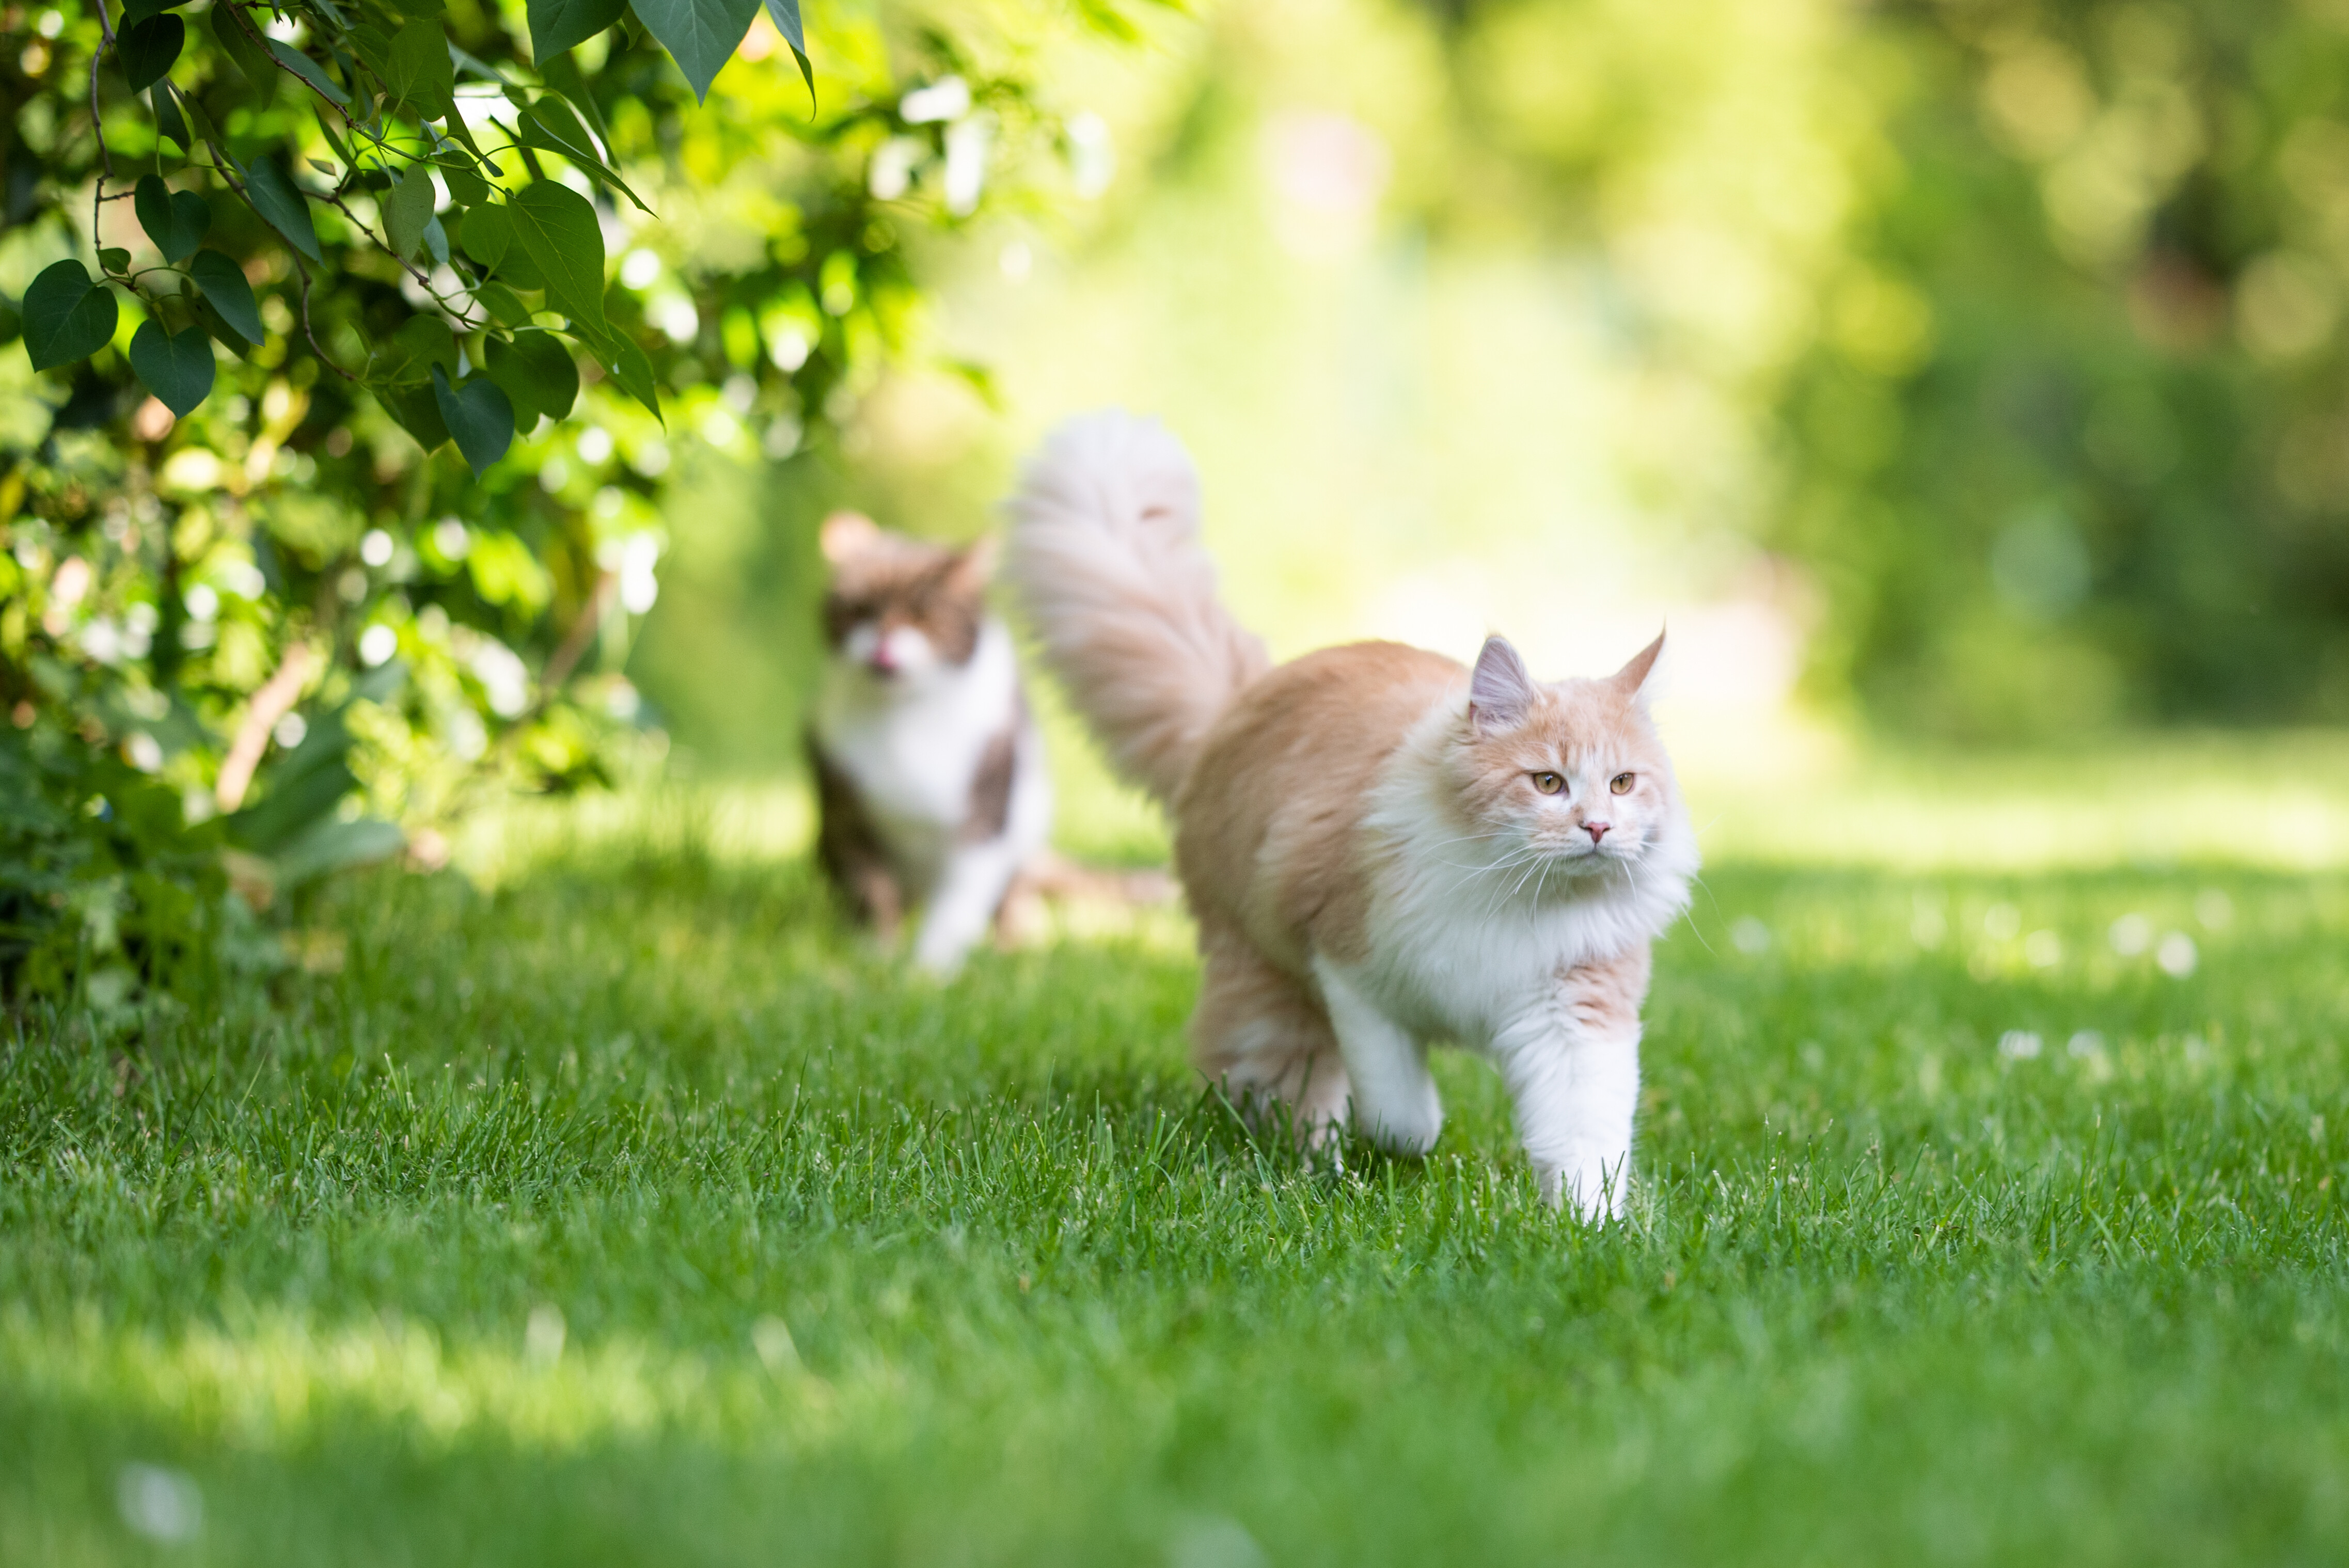 cats walking in an outdoor garden